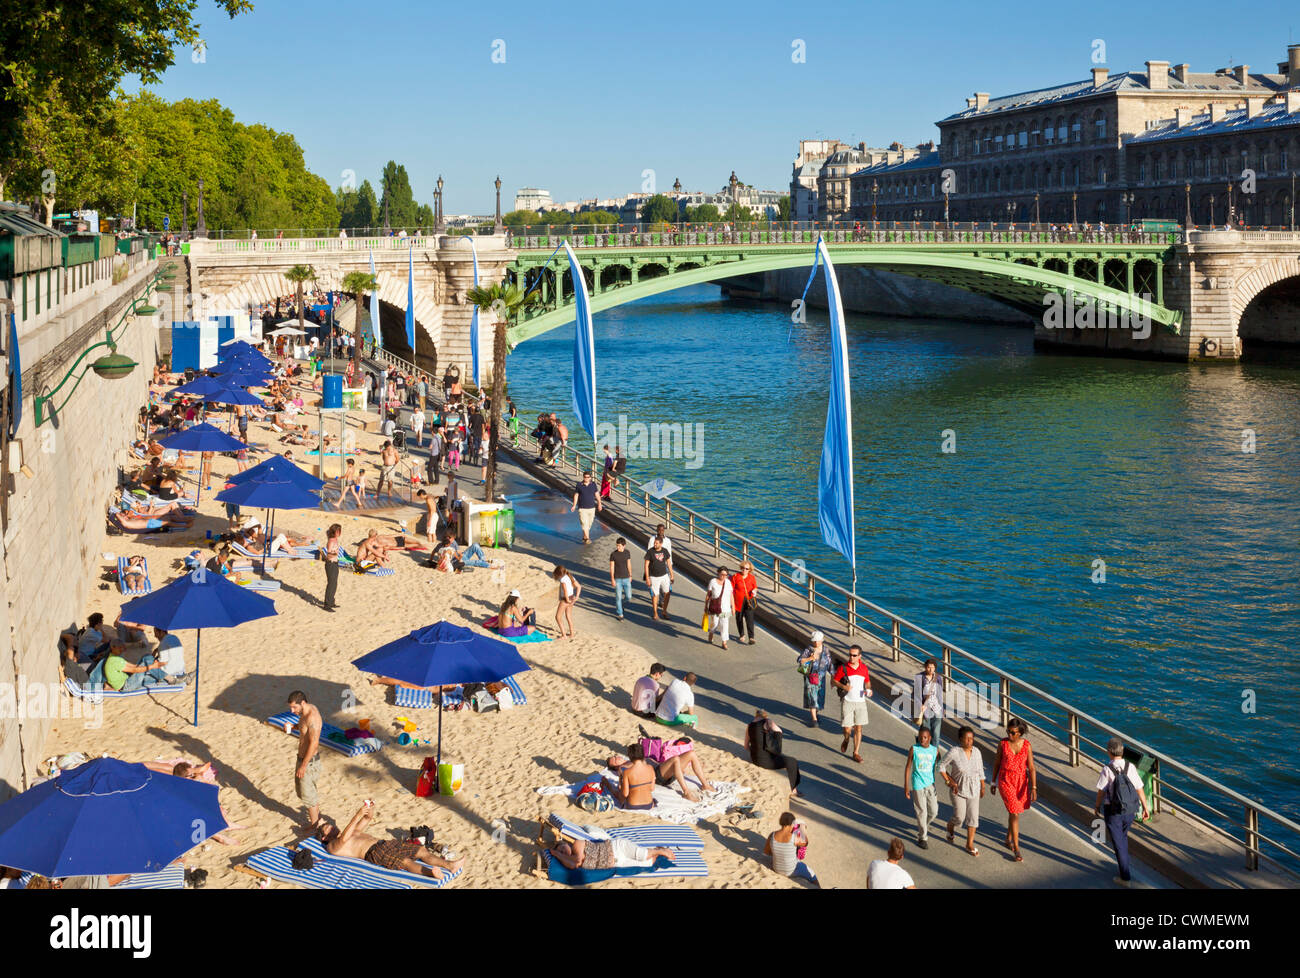 Paris Plage o Parigi spiaggia a lato del fiume Senna Parigi Francia EU Europe Foto Stock